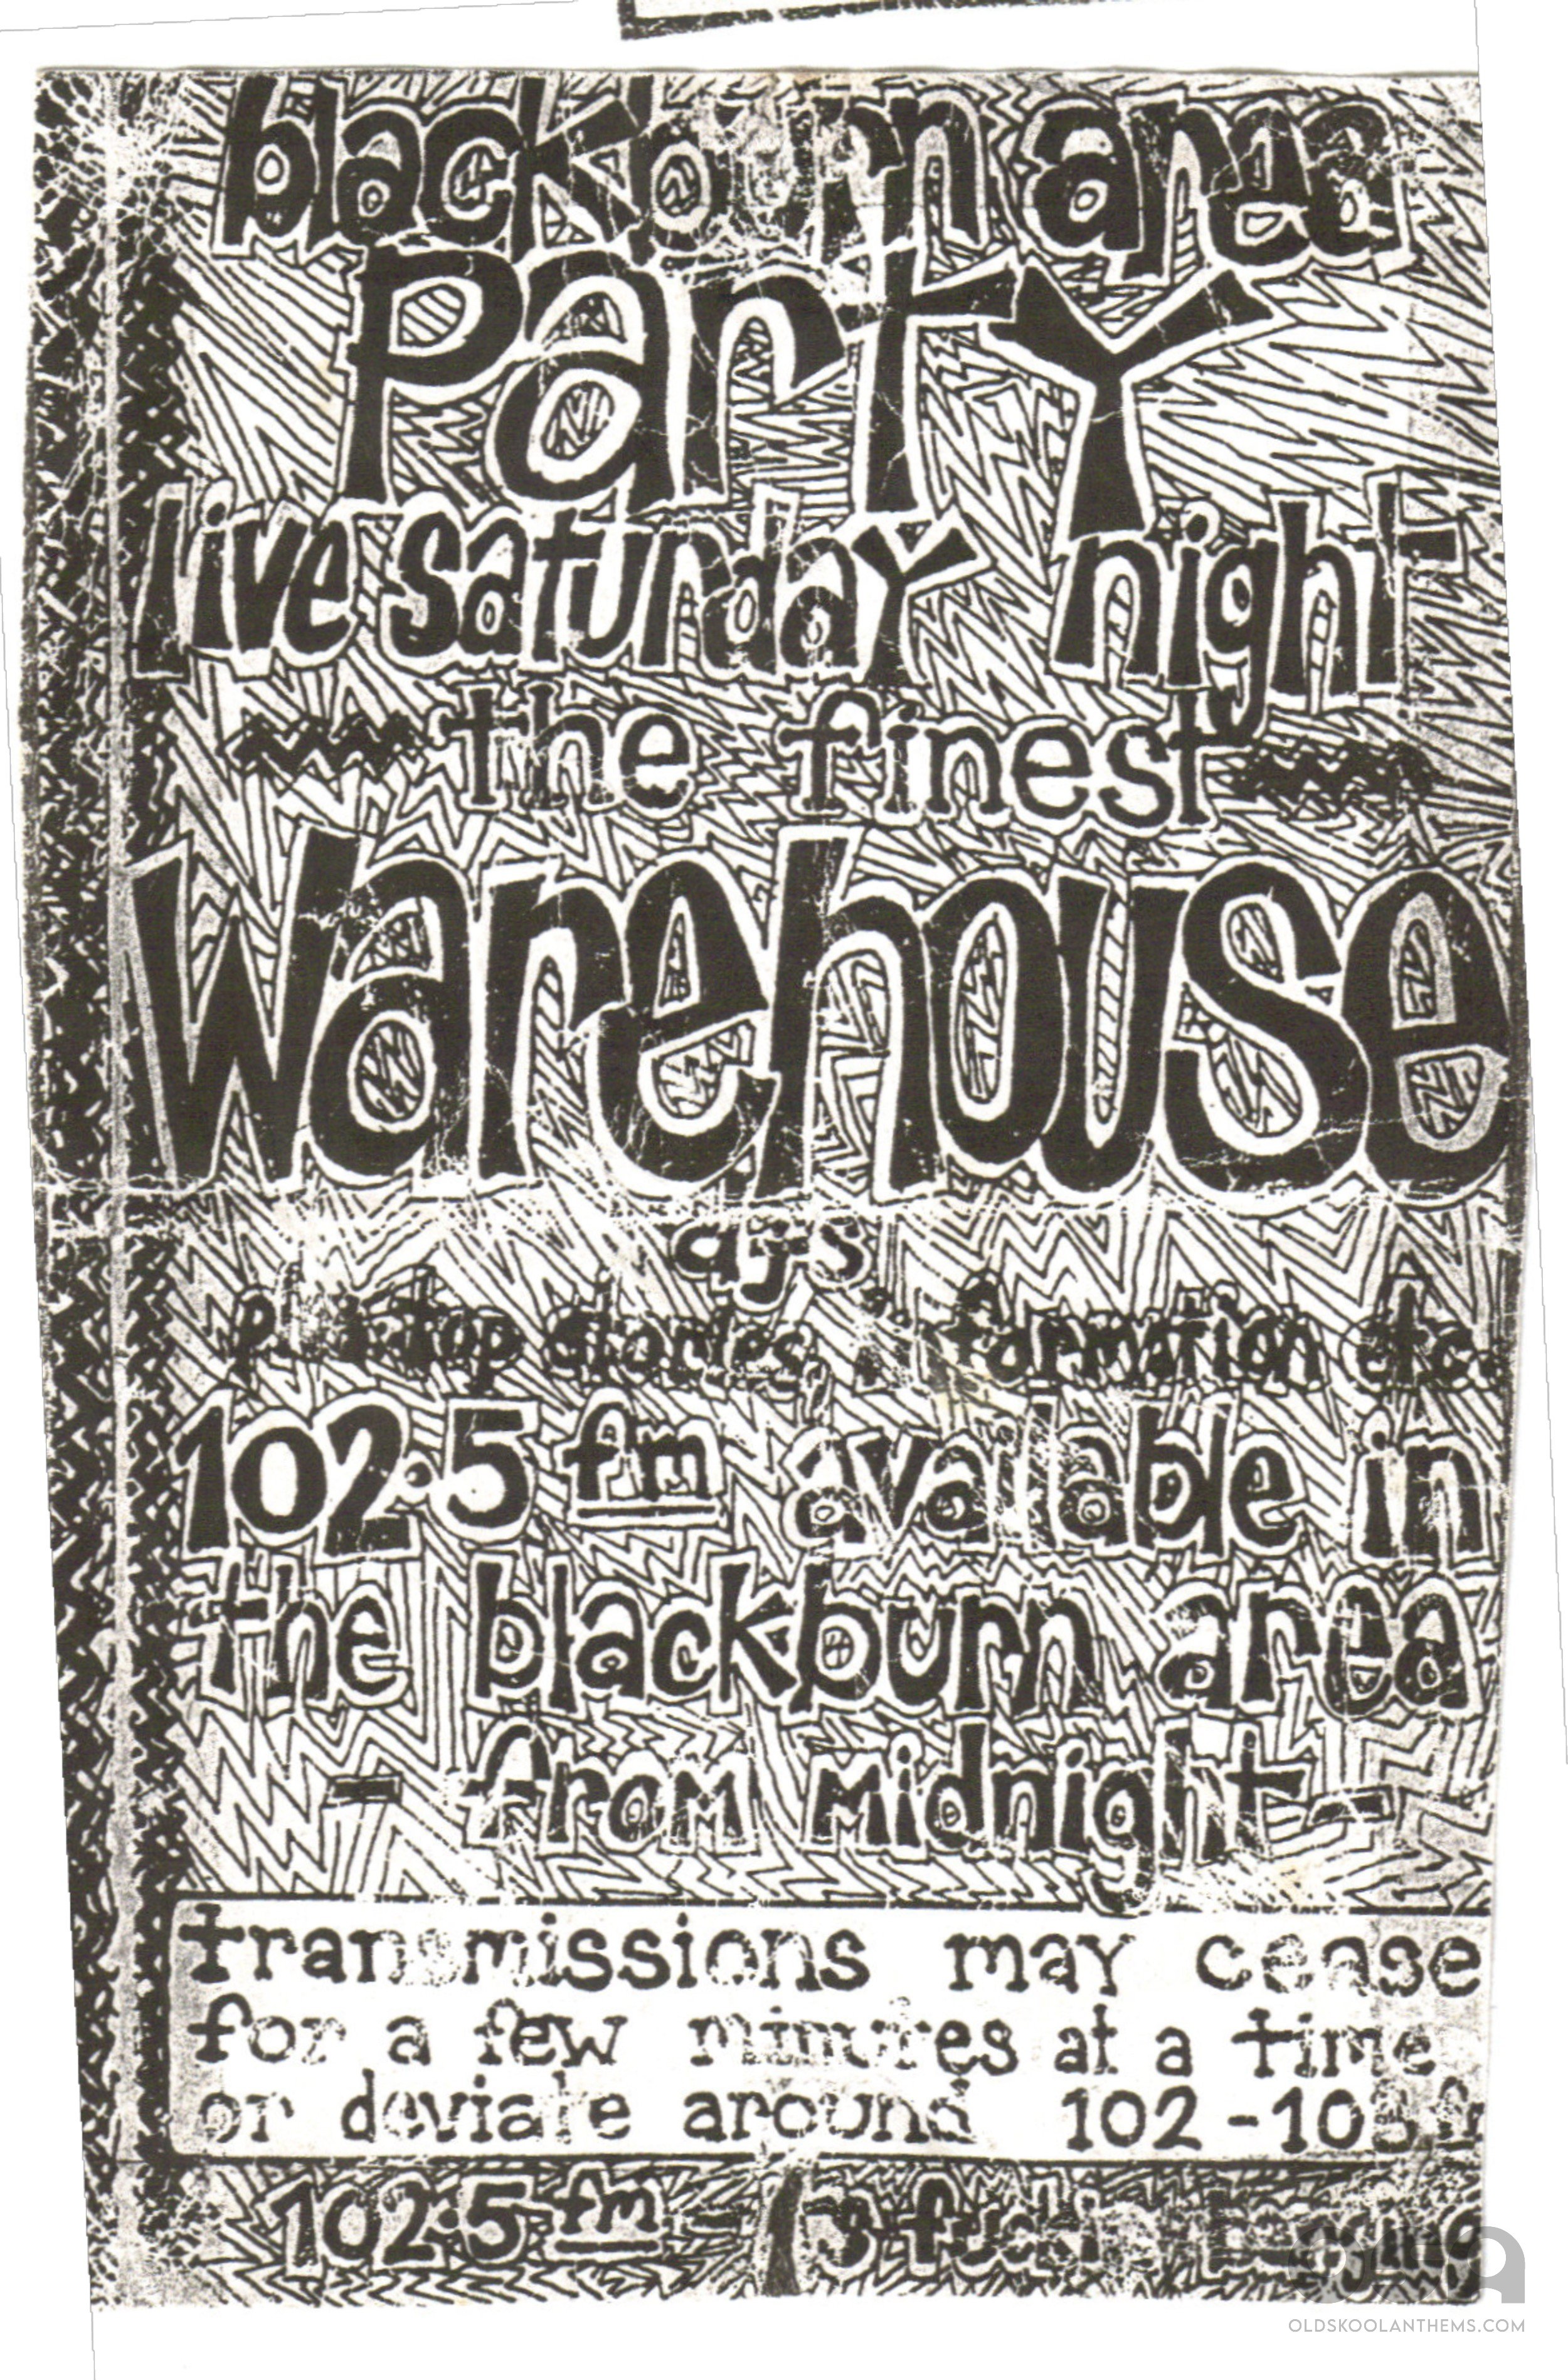 1_blackburn_party_warehouse.jpg